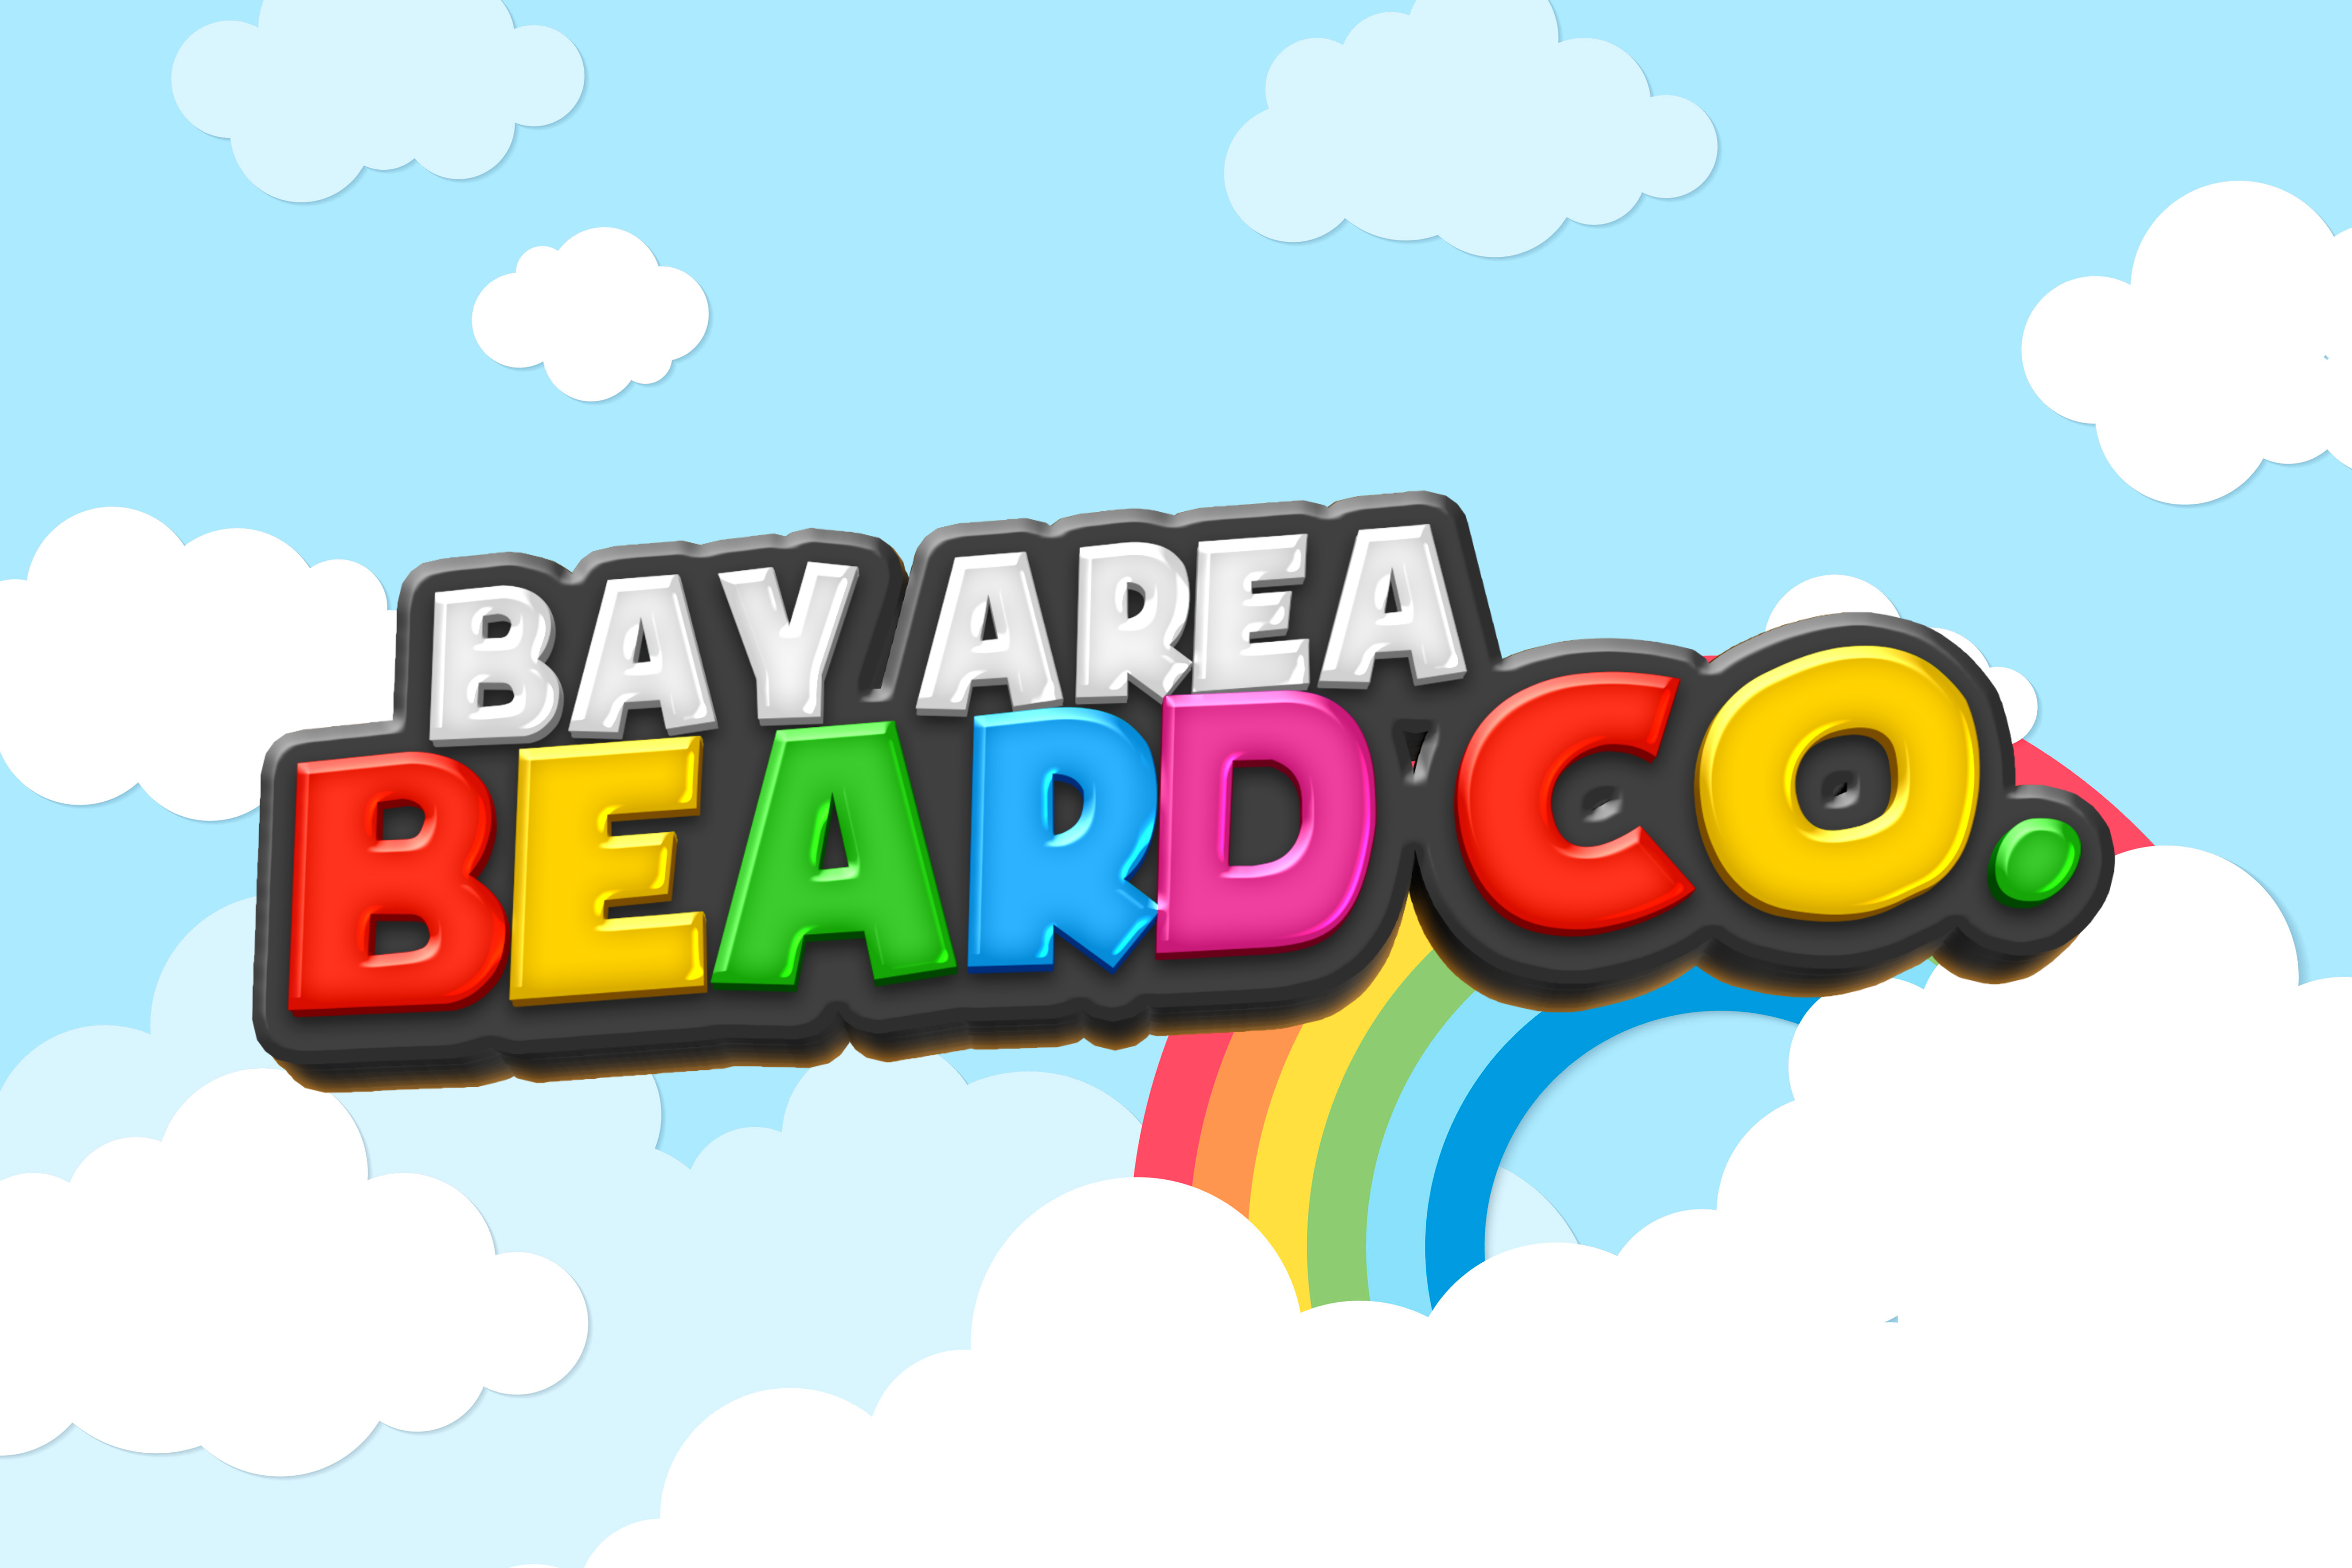 The Bay Area Beard Co. Lunch Box